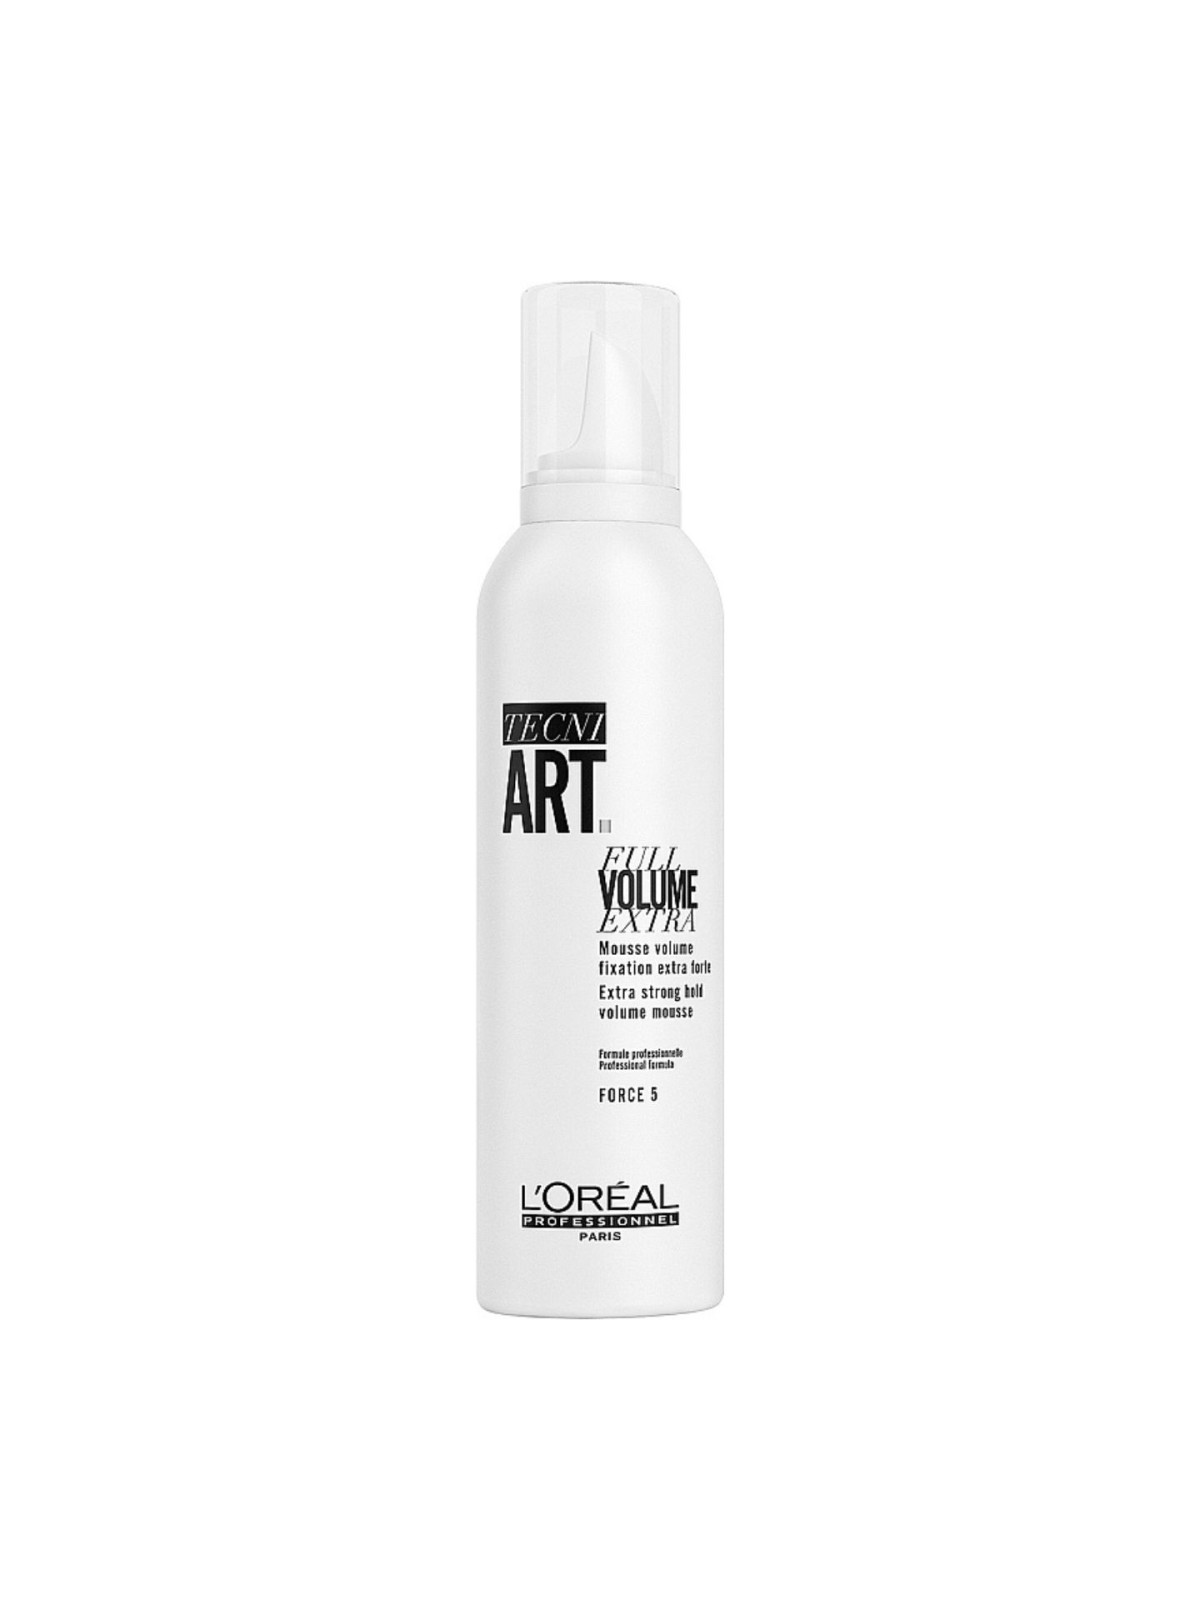 Tecni art full volume extra fuerza 5 250 ml. L'Oréal